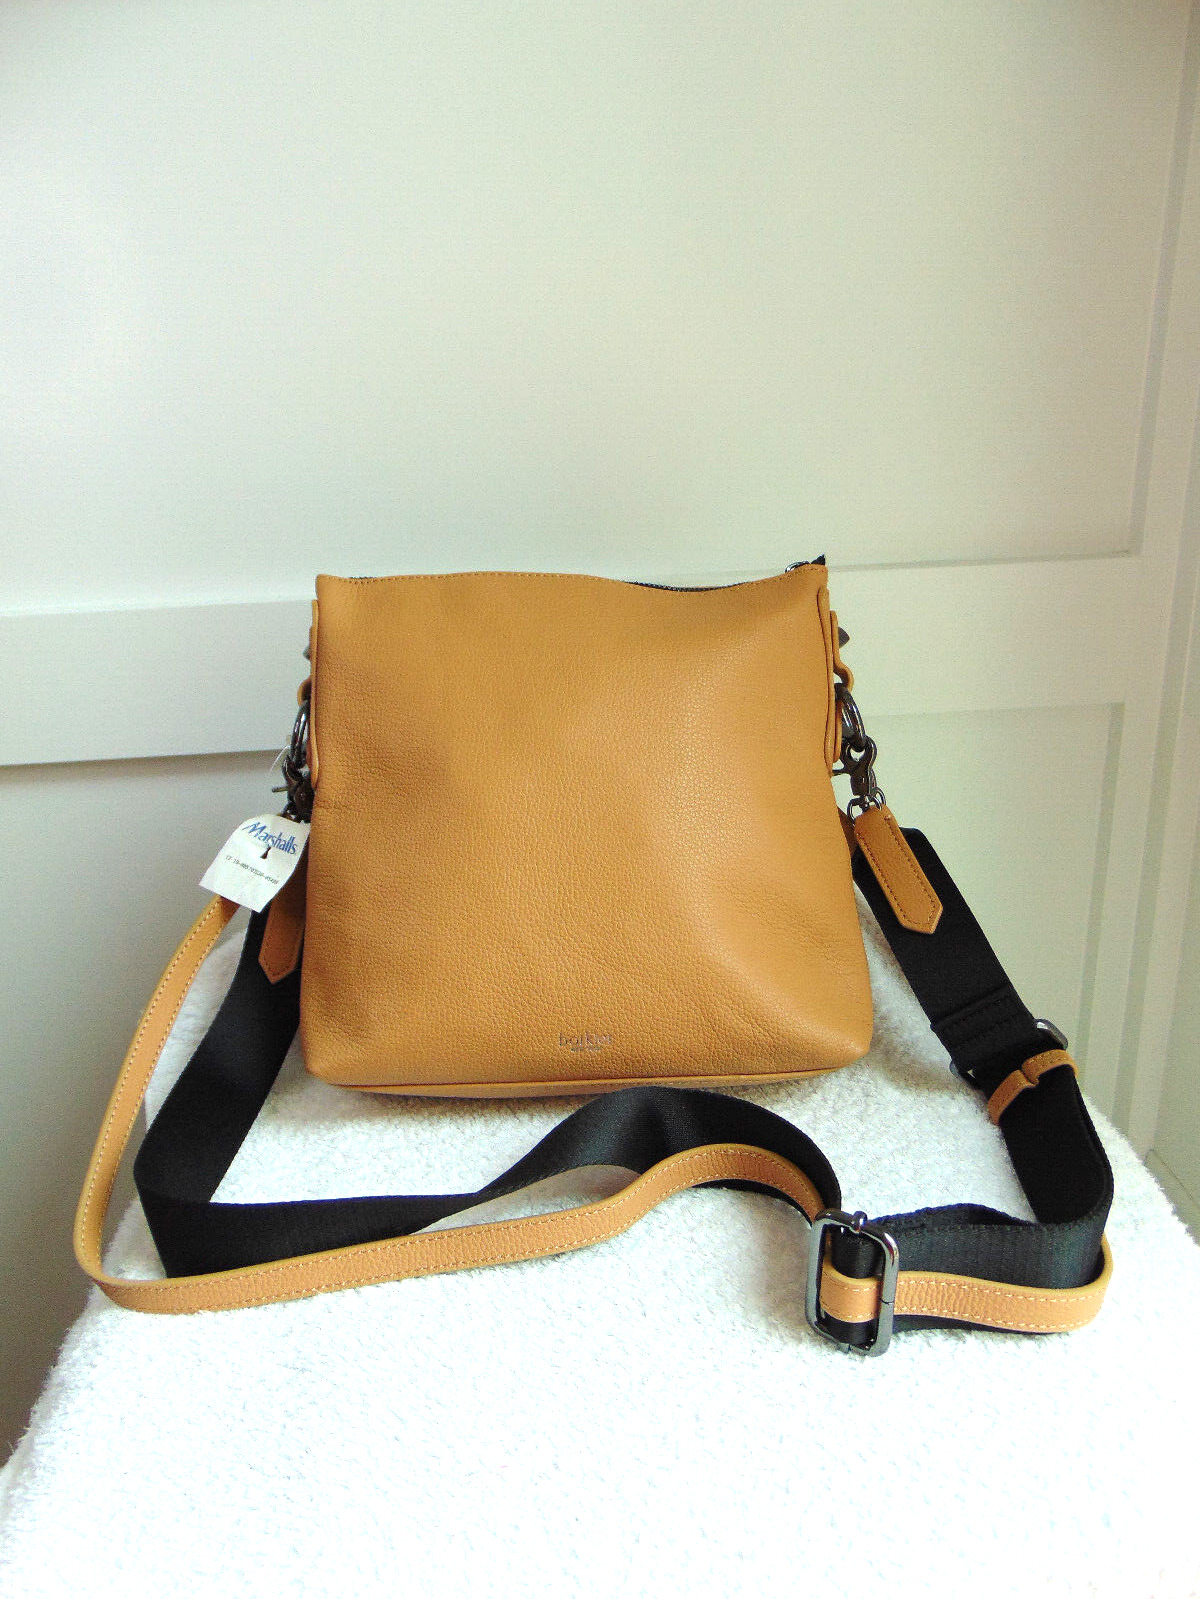 Botkier leather chelsea travel crossbody handbag camel 2 straps $198 NWT